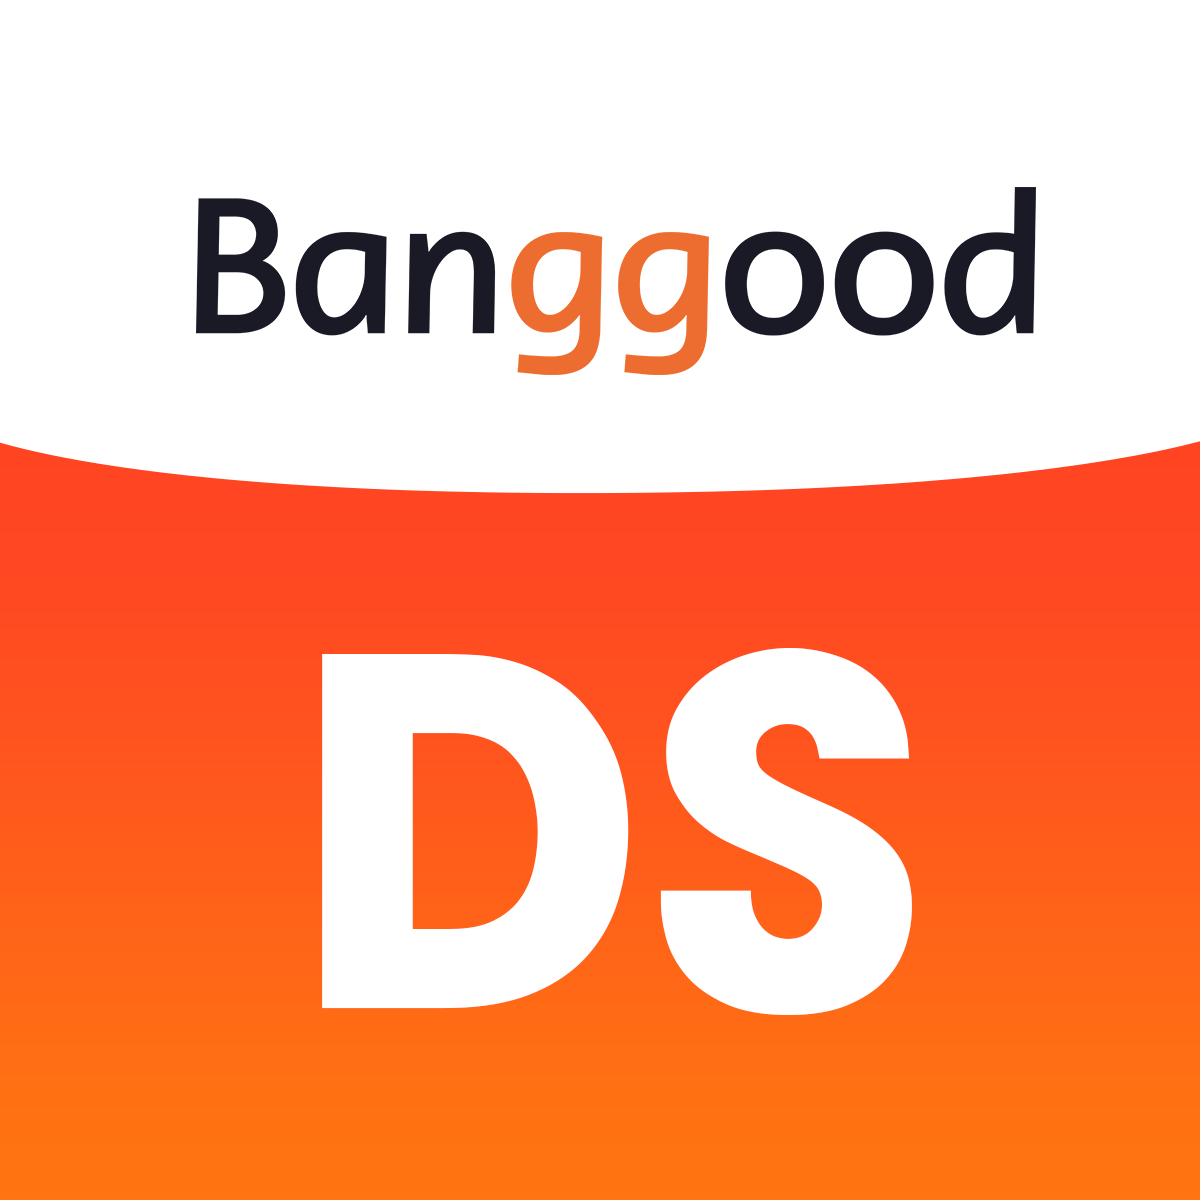 Banggood‑Dropshipping App Shopify App